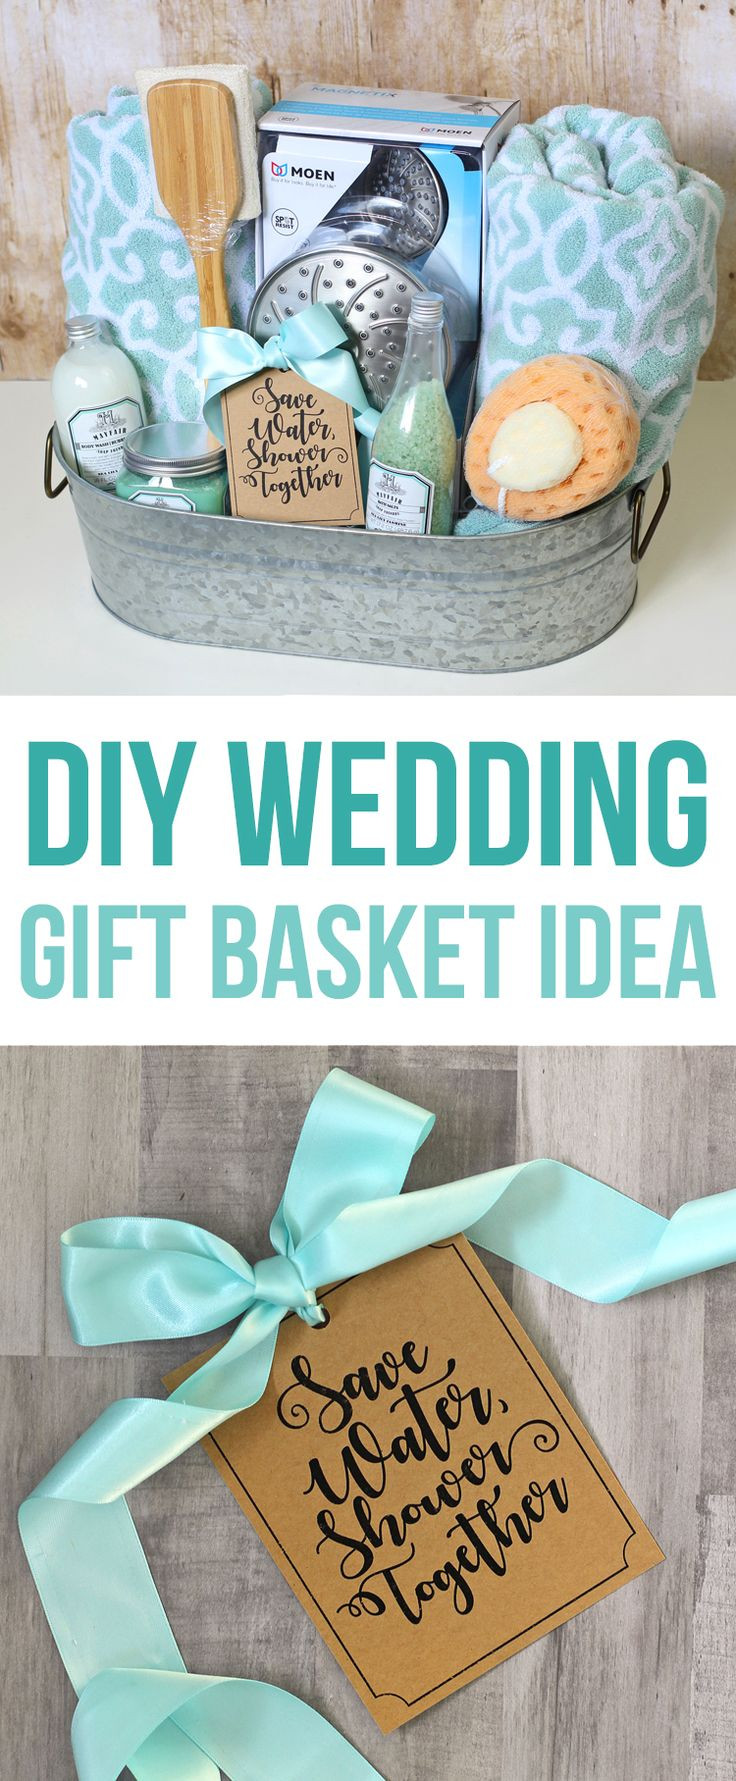 Best ideas about DIY Wedding Gift Ideas
. Save or Pin Best 25 Luxury shower ideas on Pinterest Now.